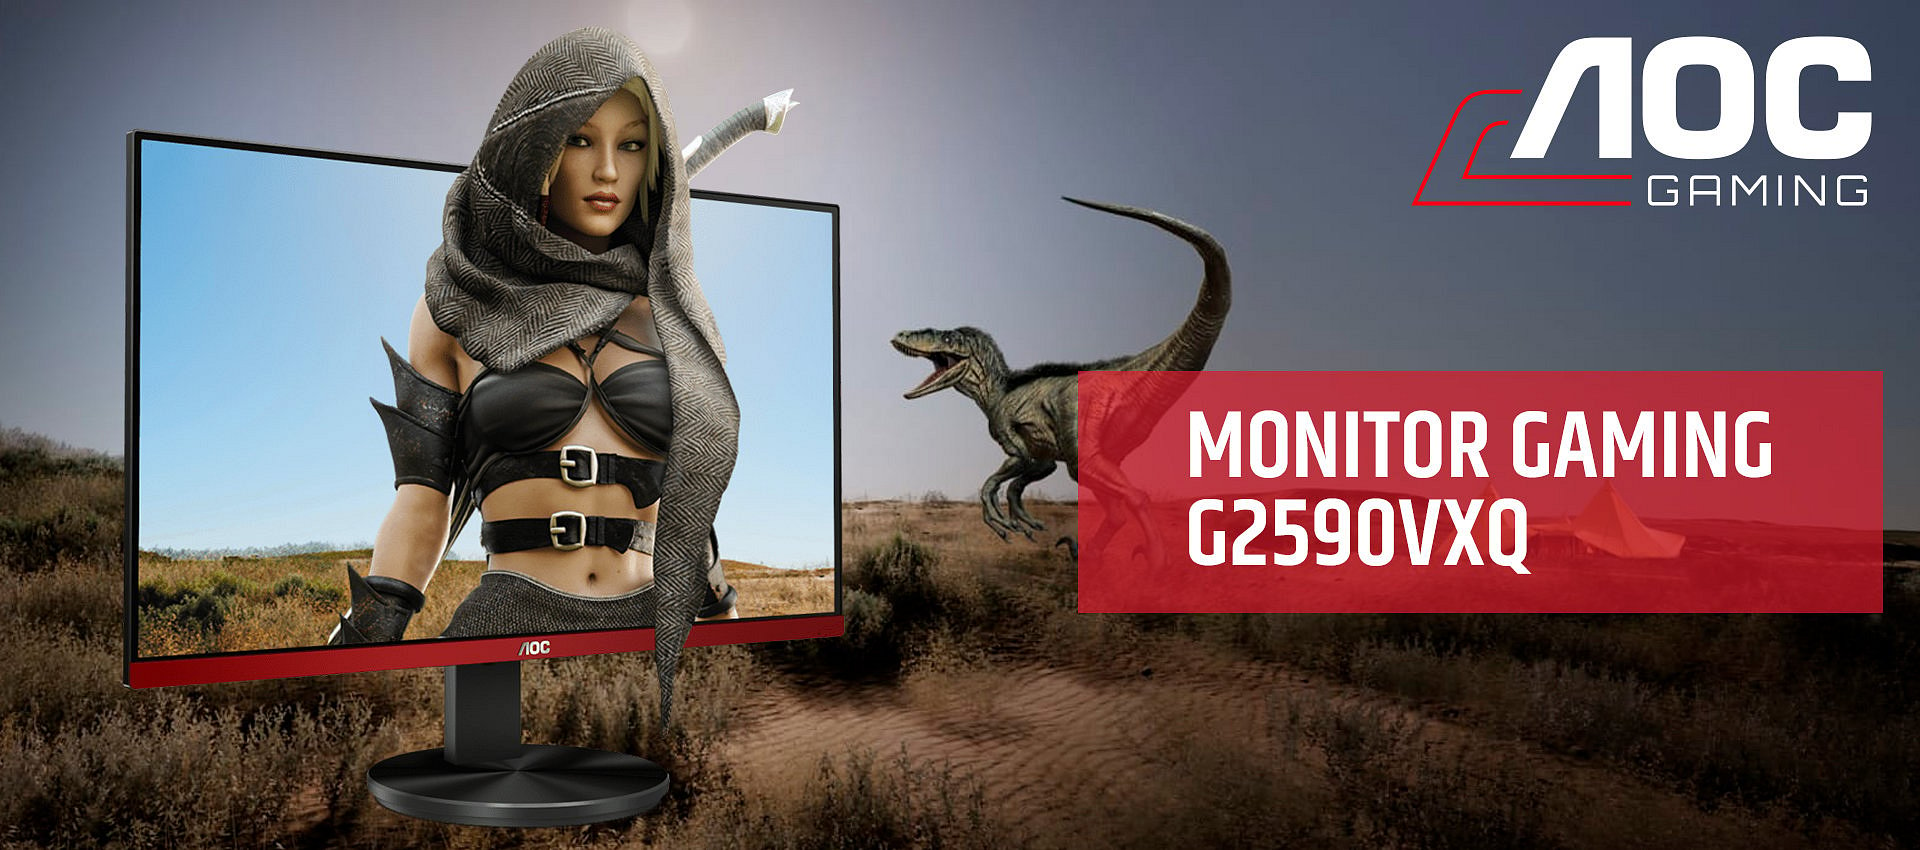 Monitor Gaming GM27-CF